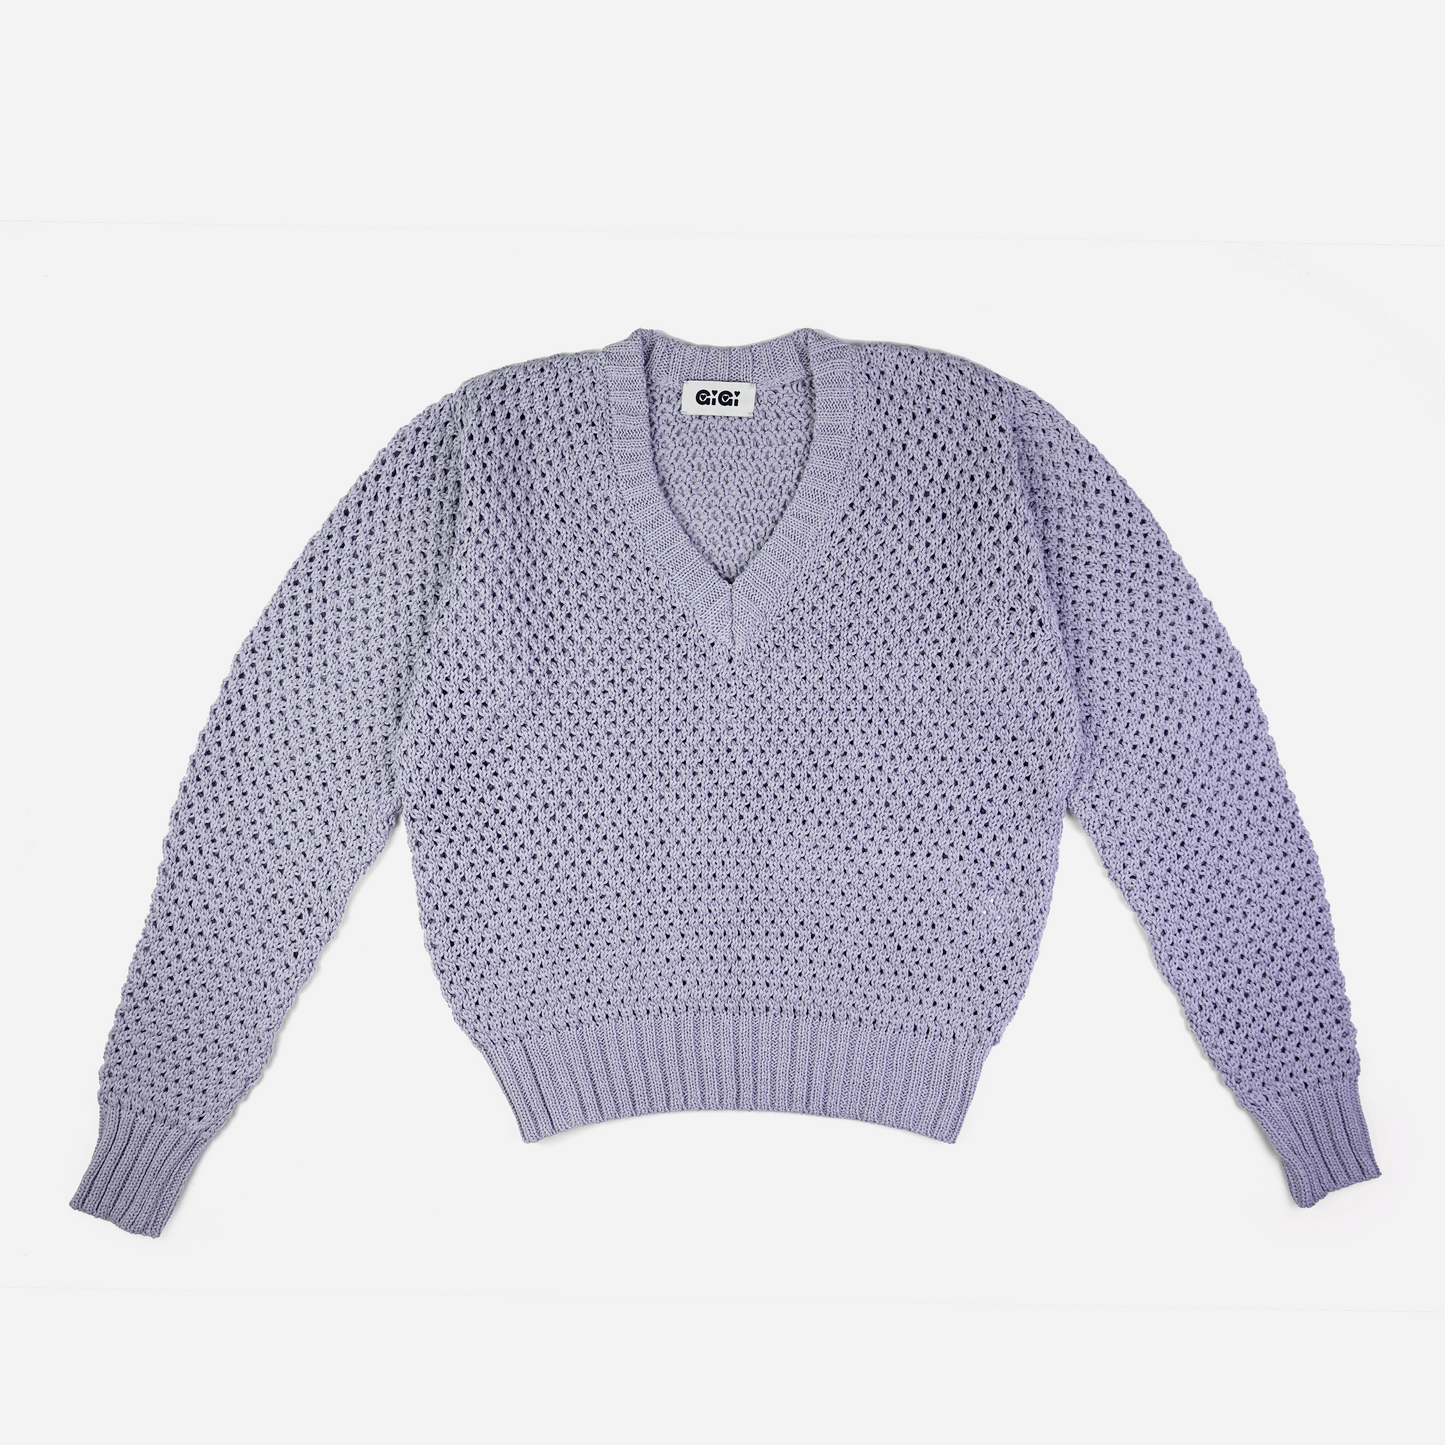 Mesh Sweater in Lavender